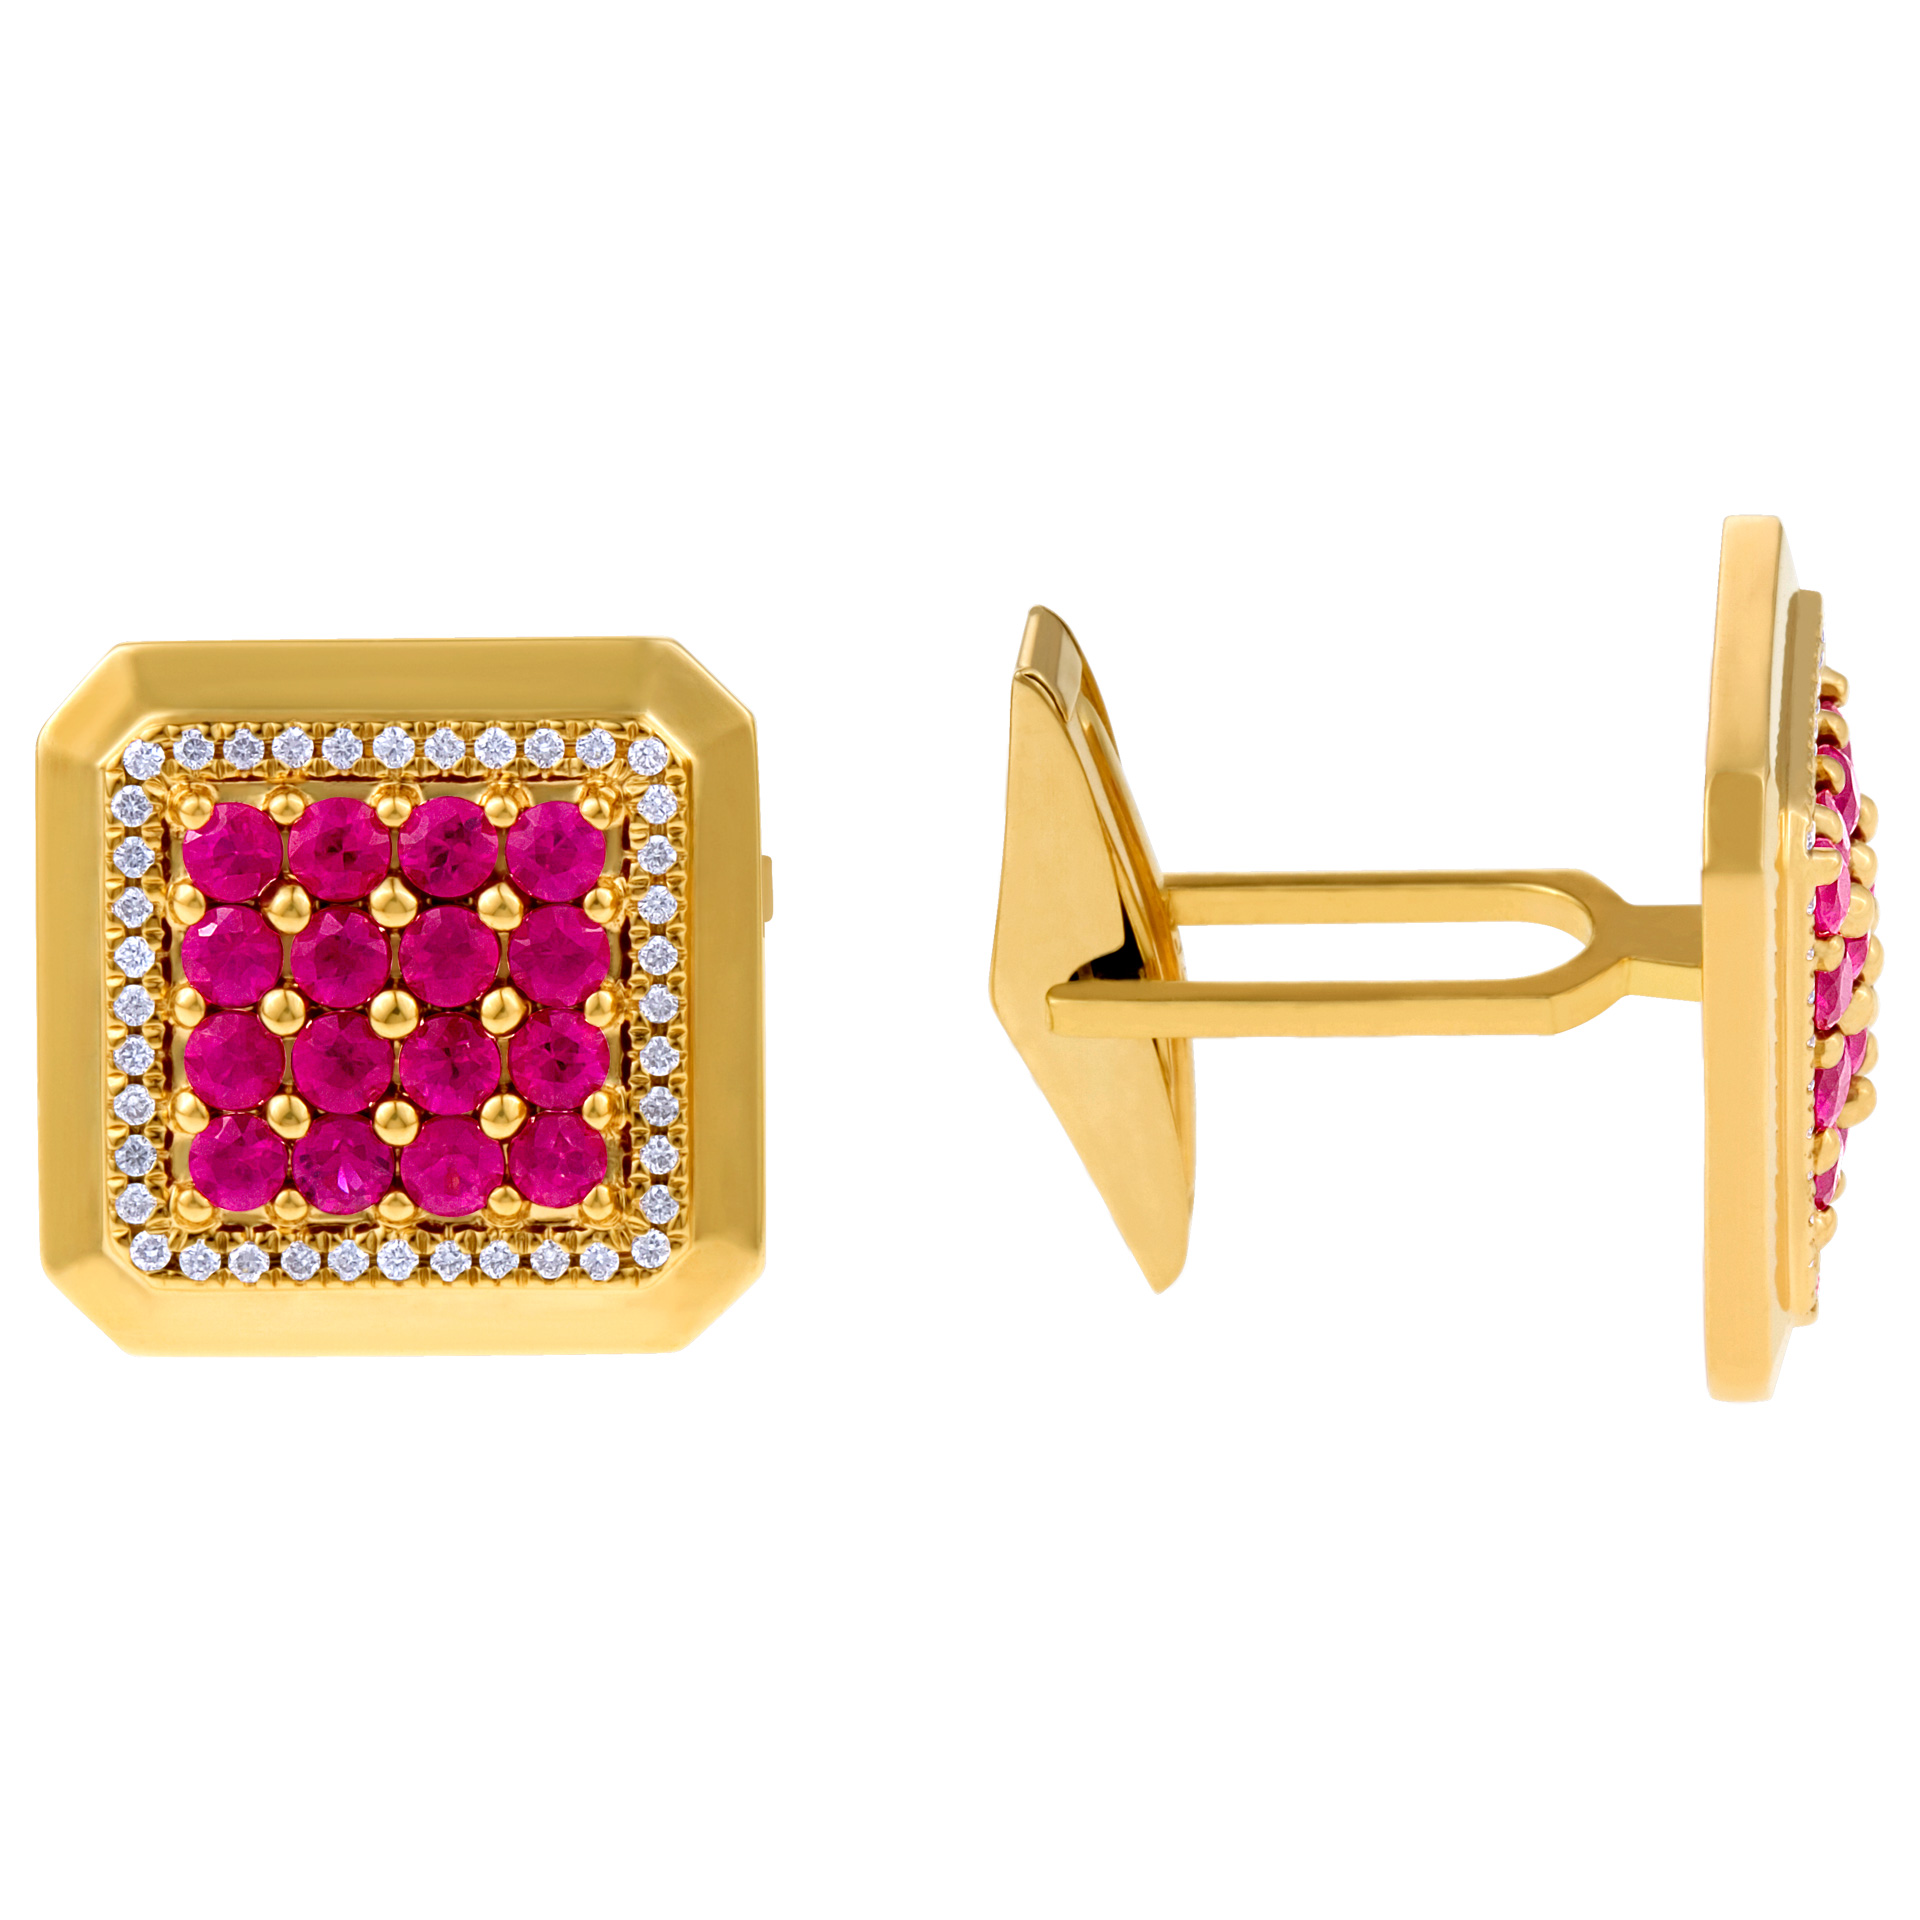 Stunning diamond and ruby cufflinks in 18k yellow gold